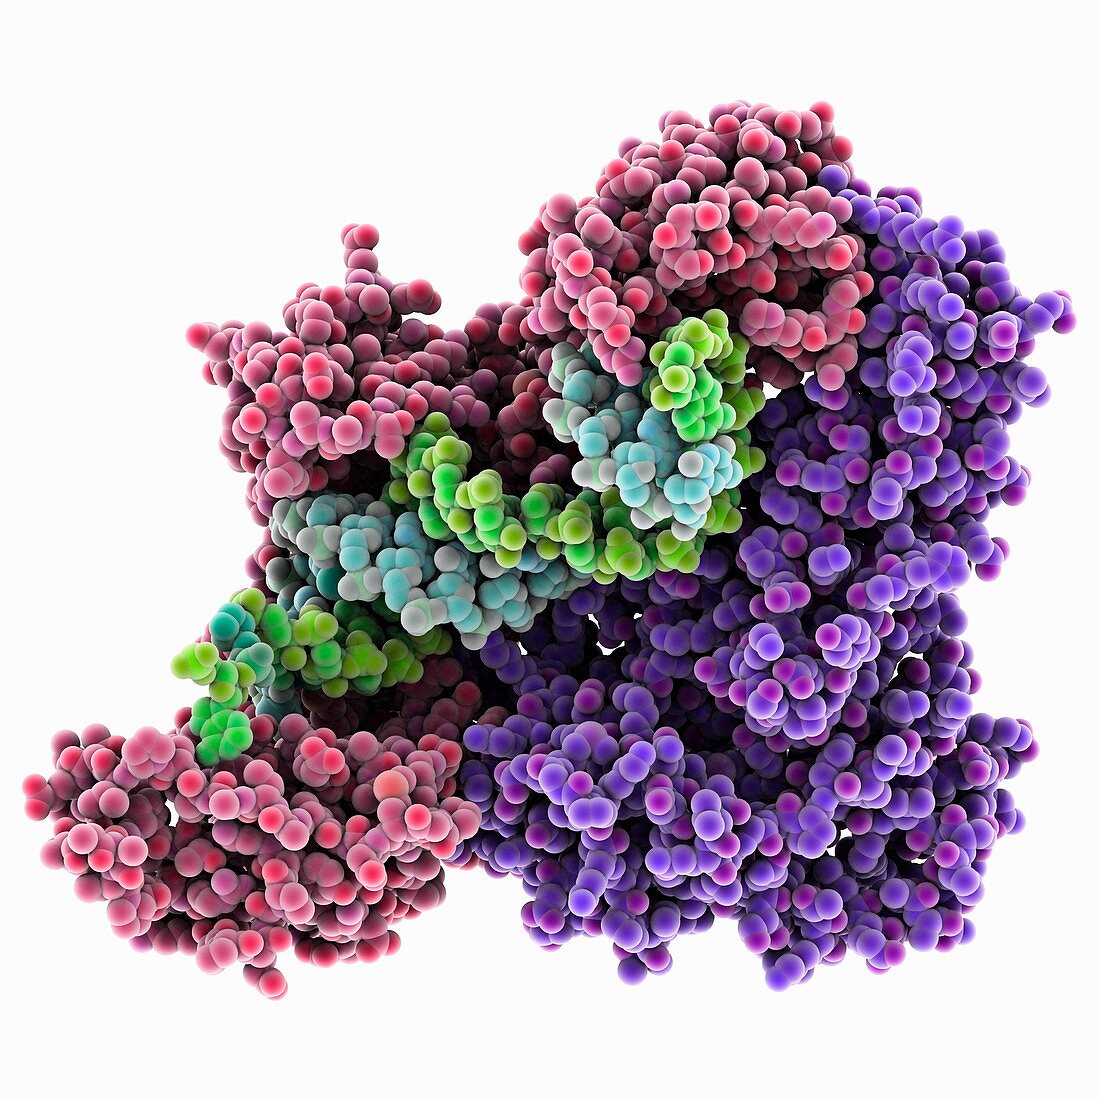 HIV-1 reverse transcriptase enzyme